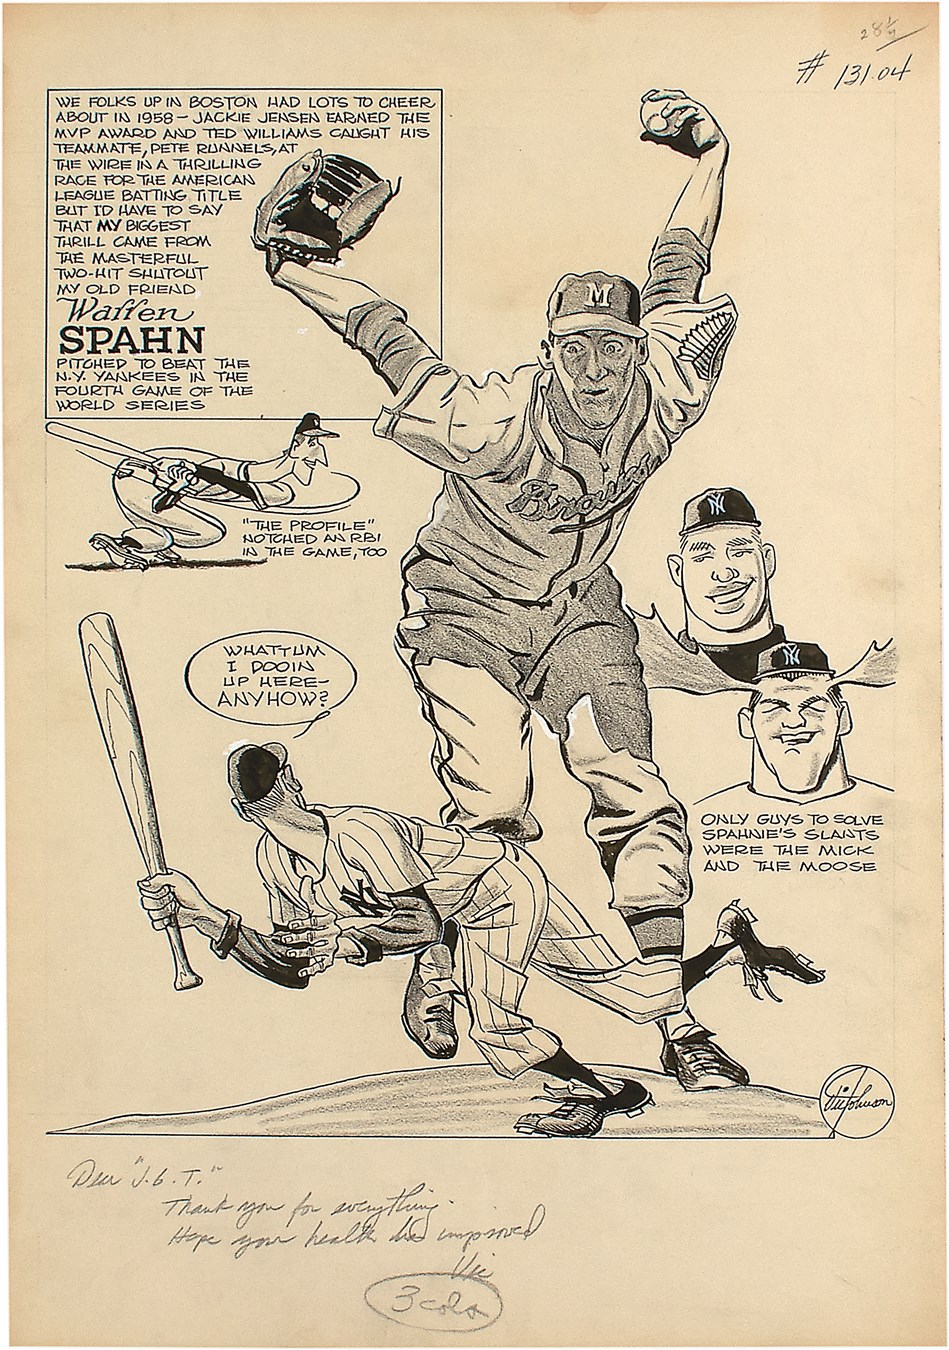 Sports Fine Art - 1958 World Series Mickey Mantle & Warren Spahn Original Art - Published in The Sporting News